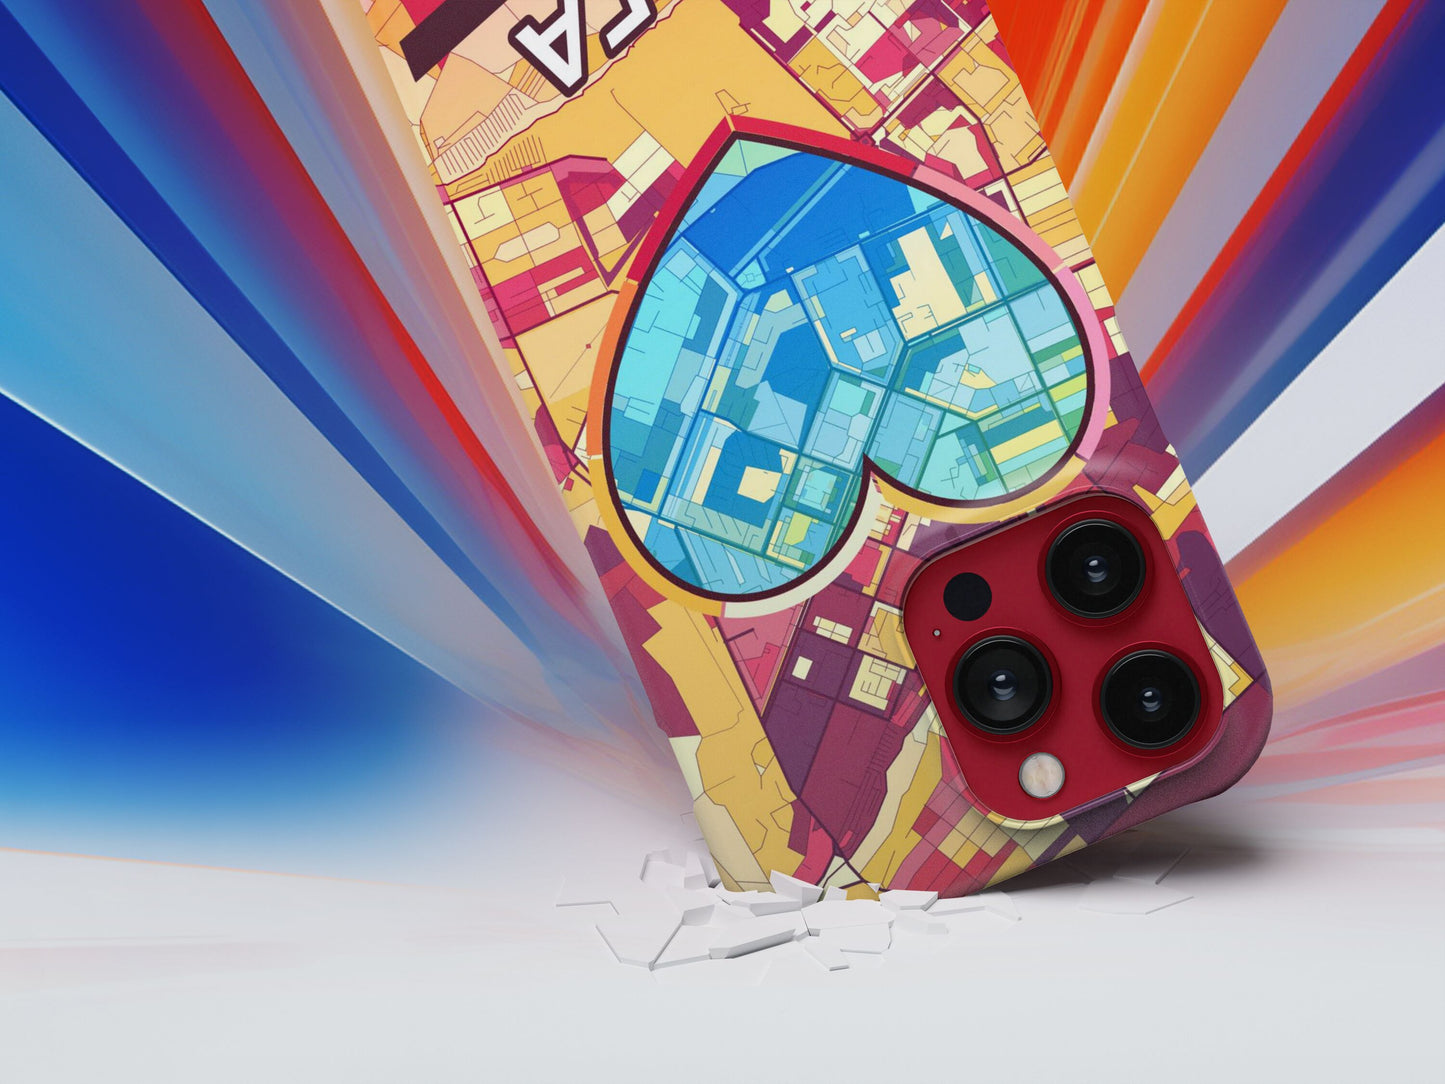 Yurga Russia slim phone case with colorful icon